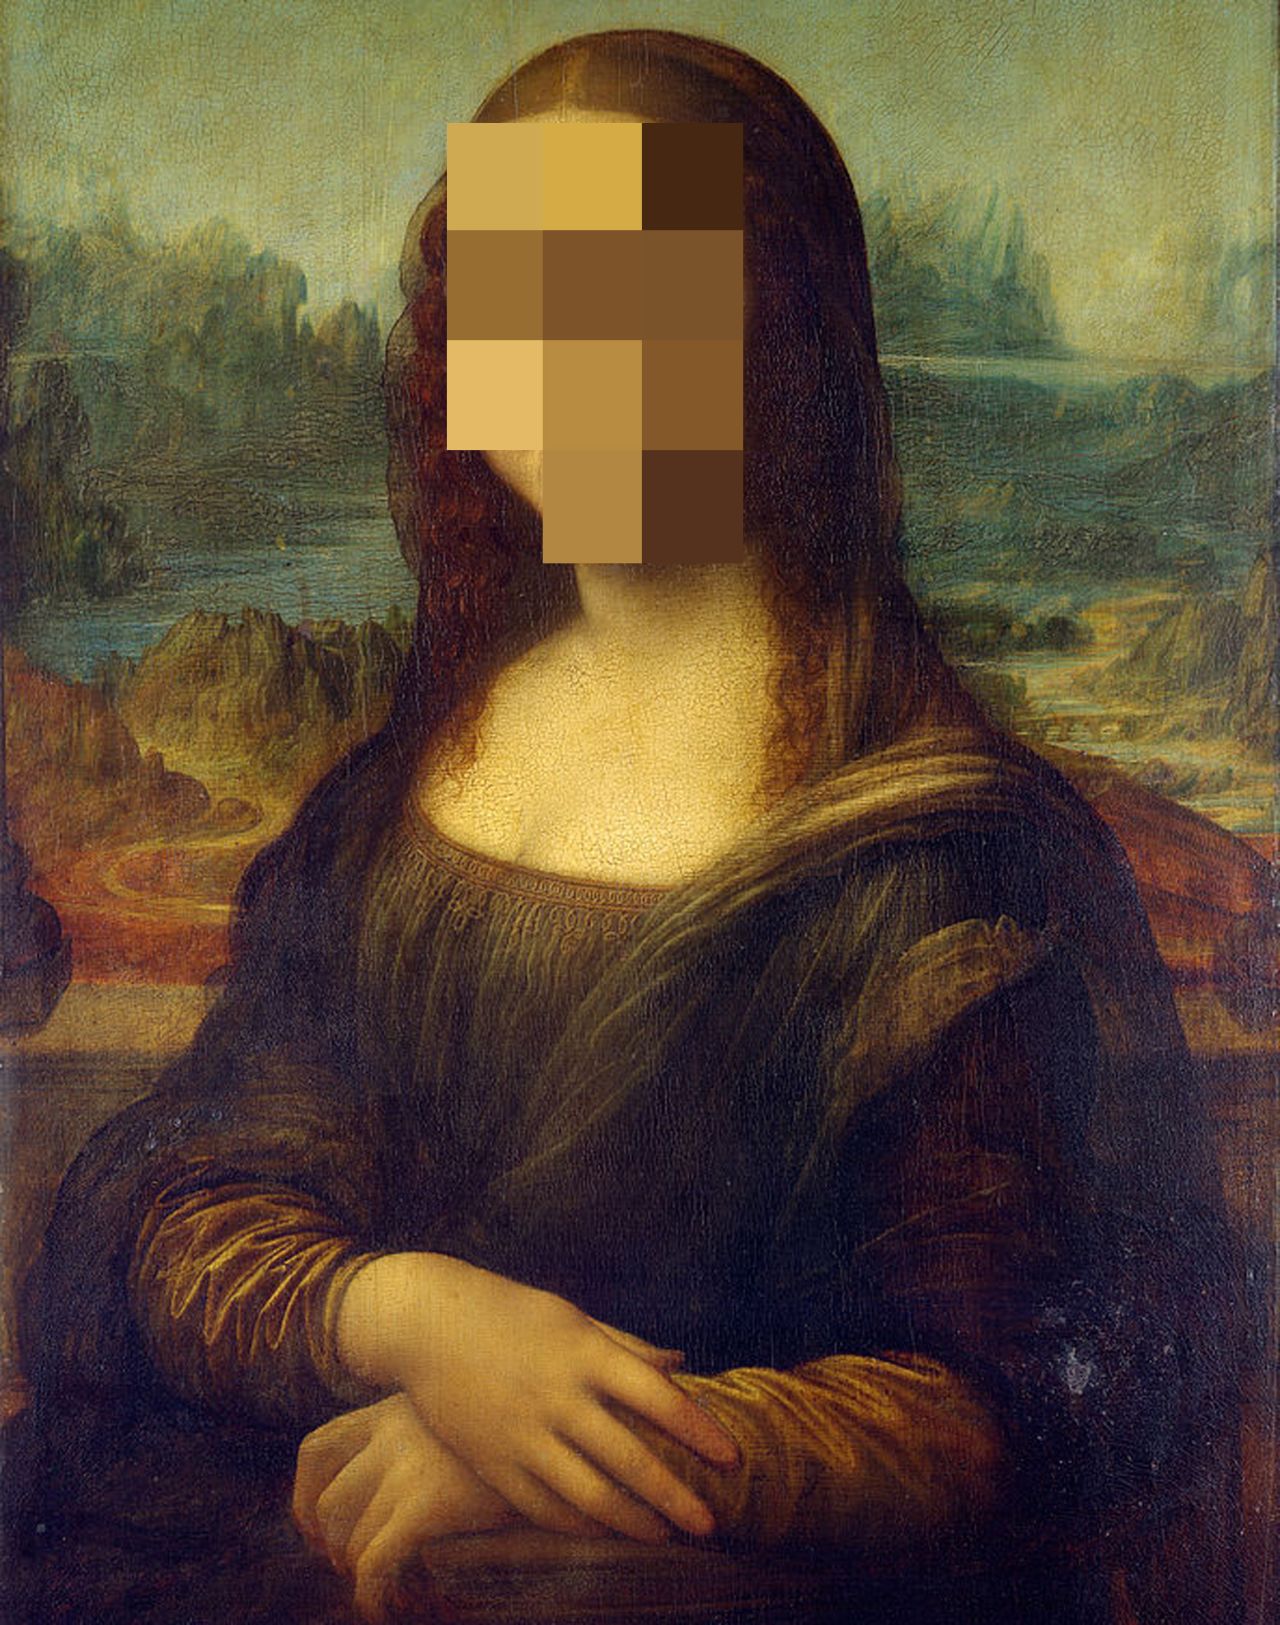 This Jonathan Lewis work also appropriates "Mona Lisa." 